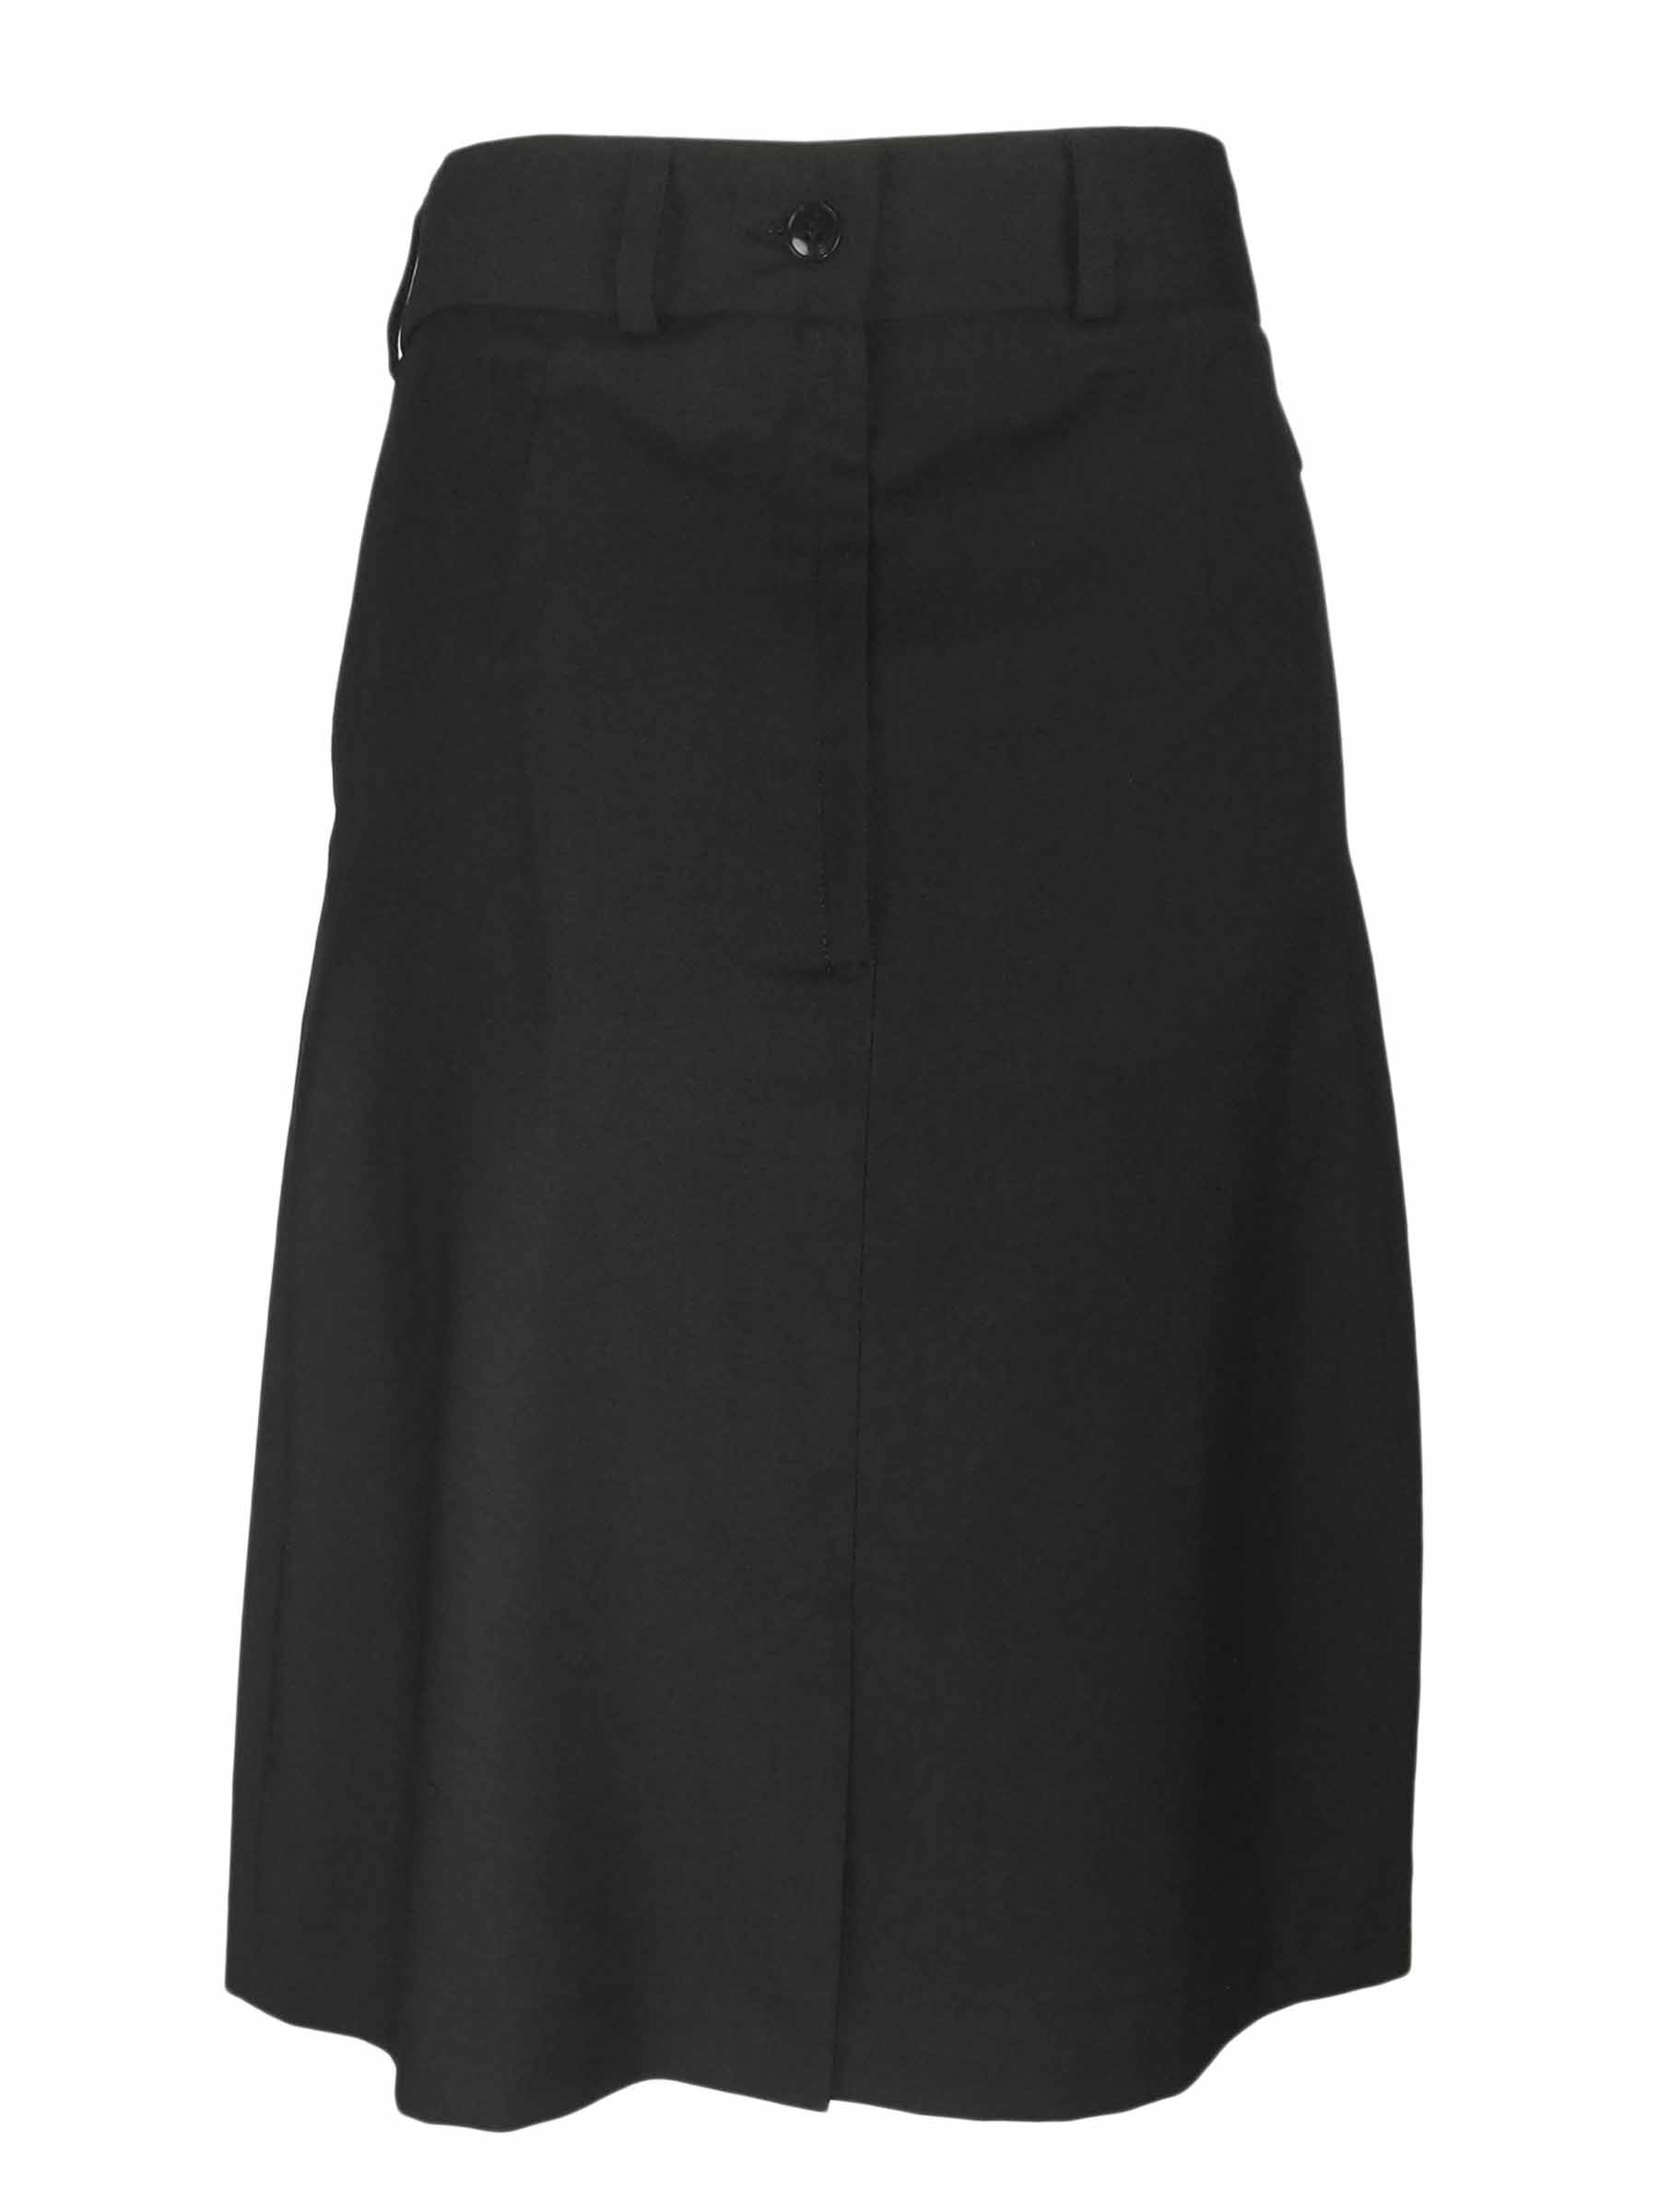 A-Line Custom Skirt - Black Wool Blend - Uniform Edit